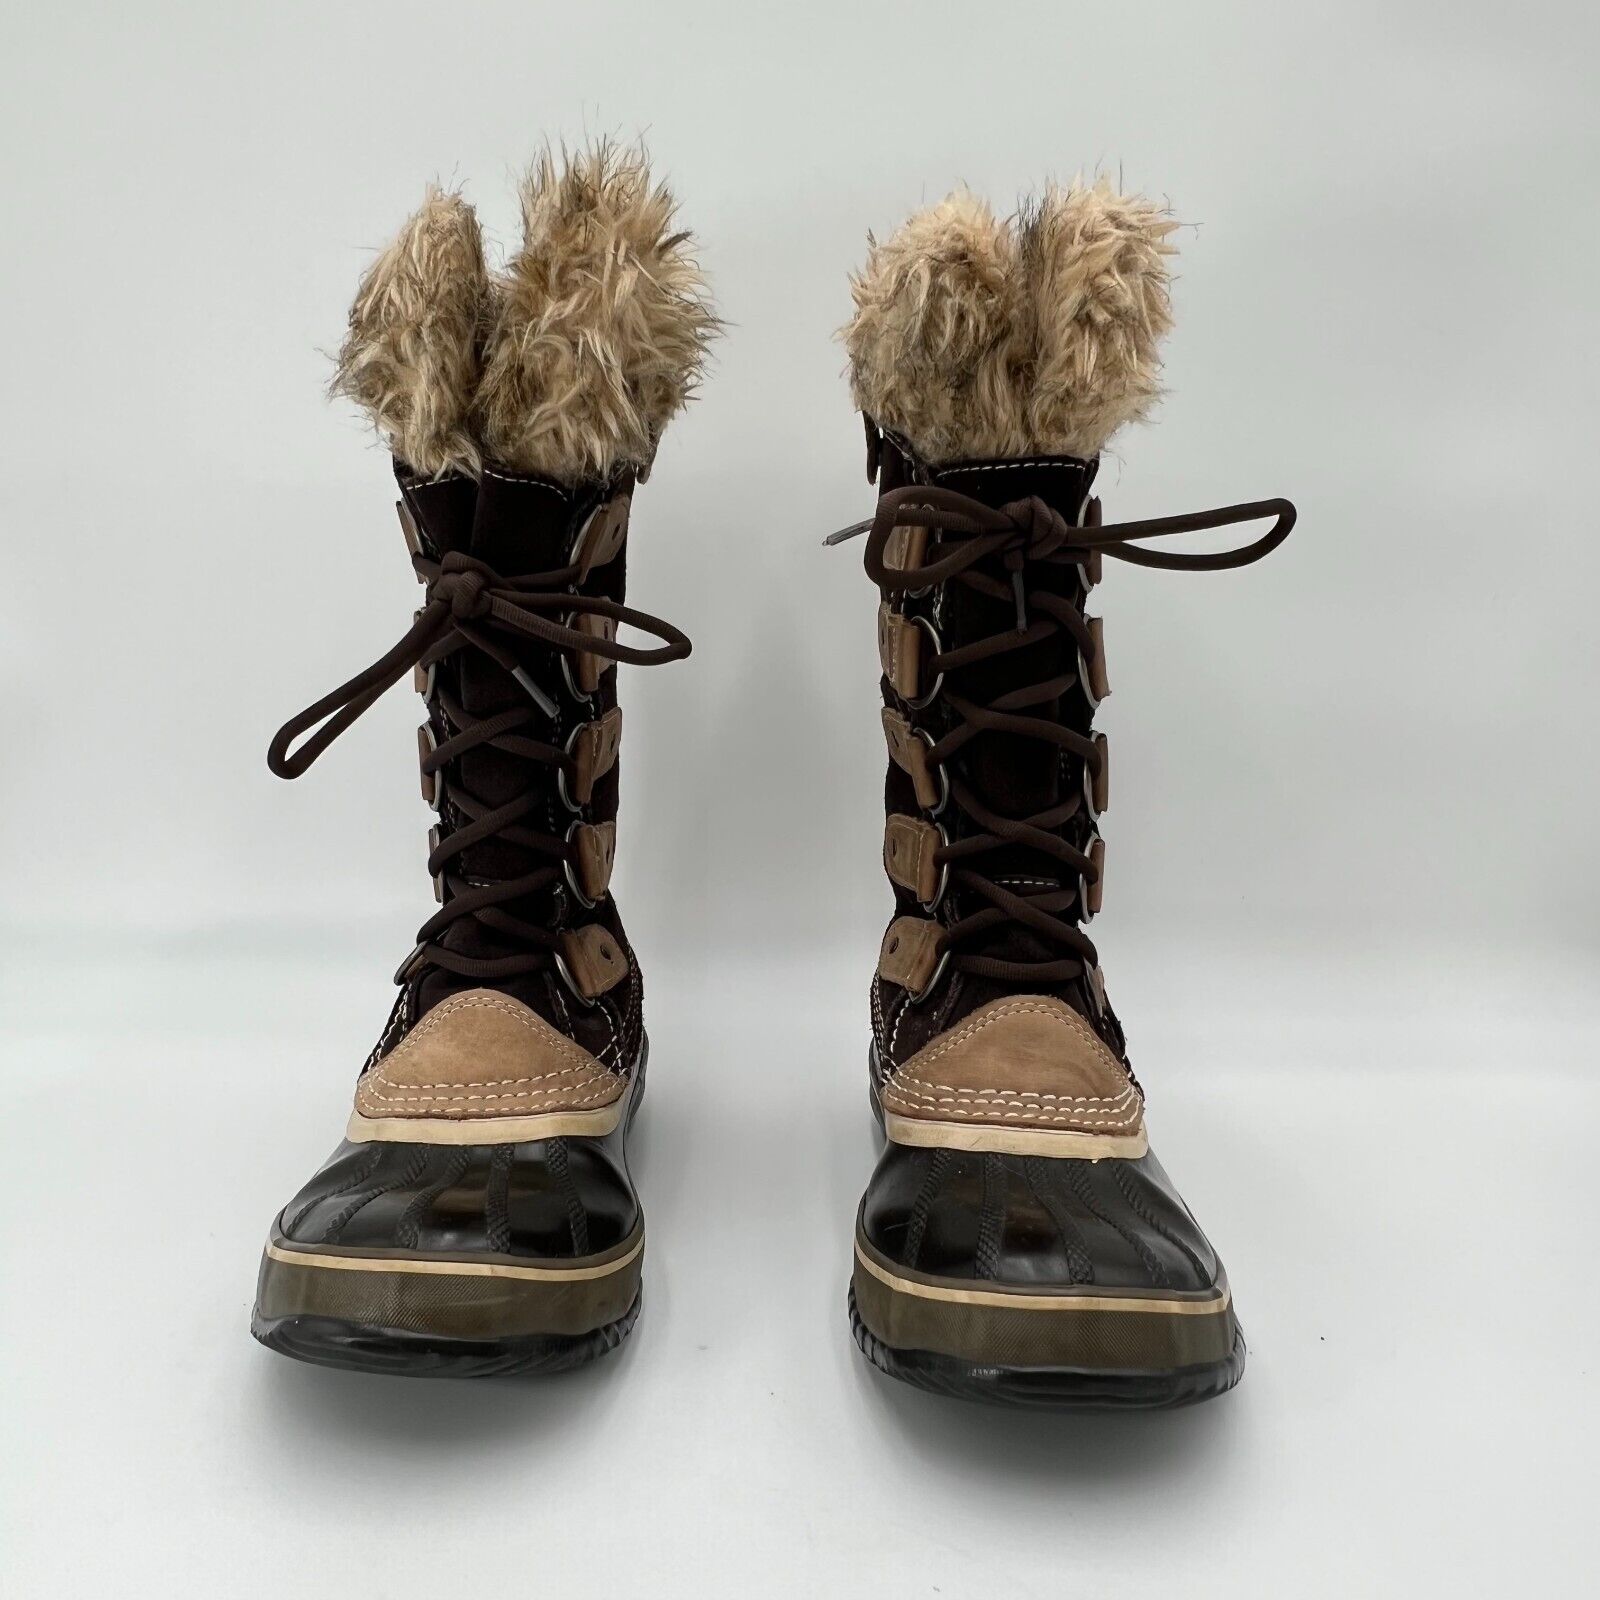 Sorel Joan of Arctic Suede Faux Fur Snow Winter Boots Women 8 Brown Mid Calf